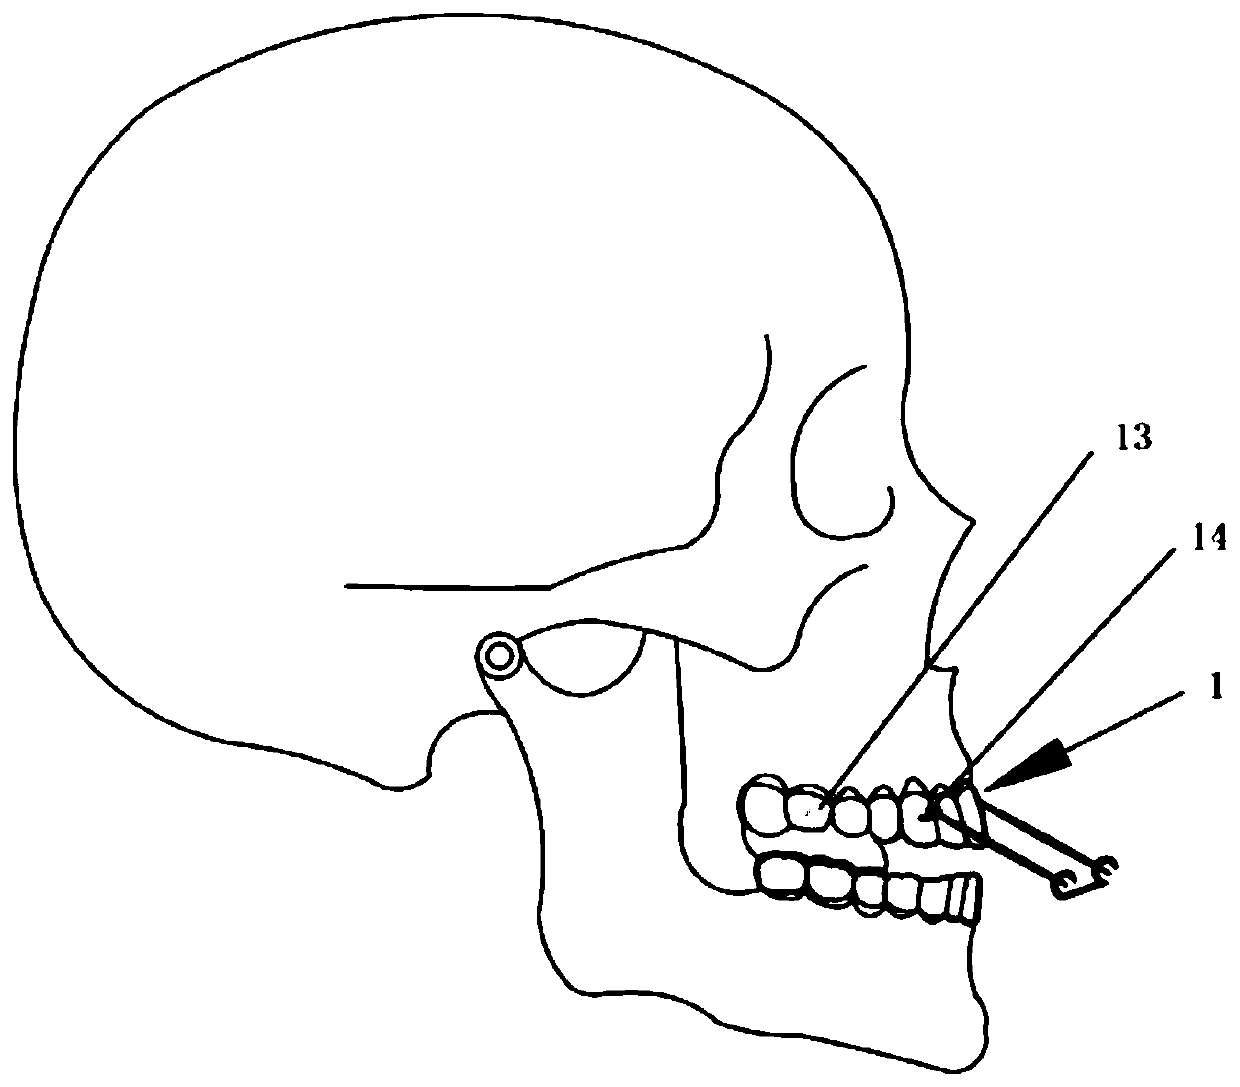 Dental-facial deformity orthopedics system and design method thereof